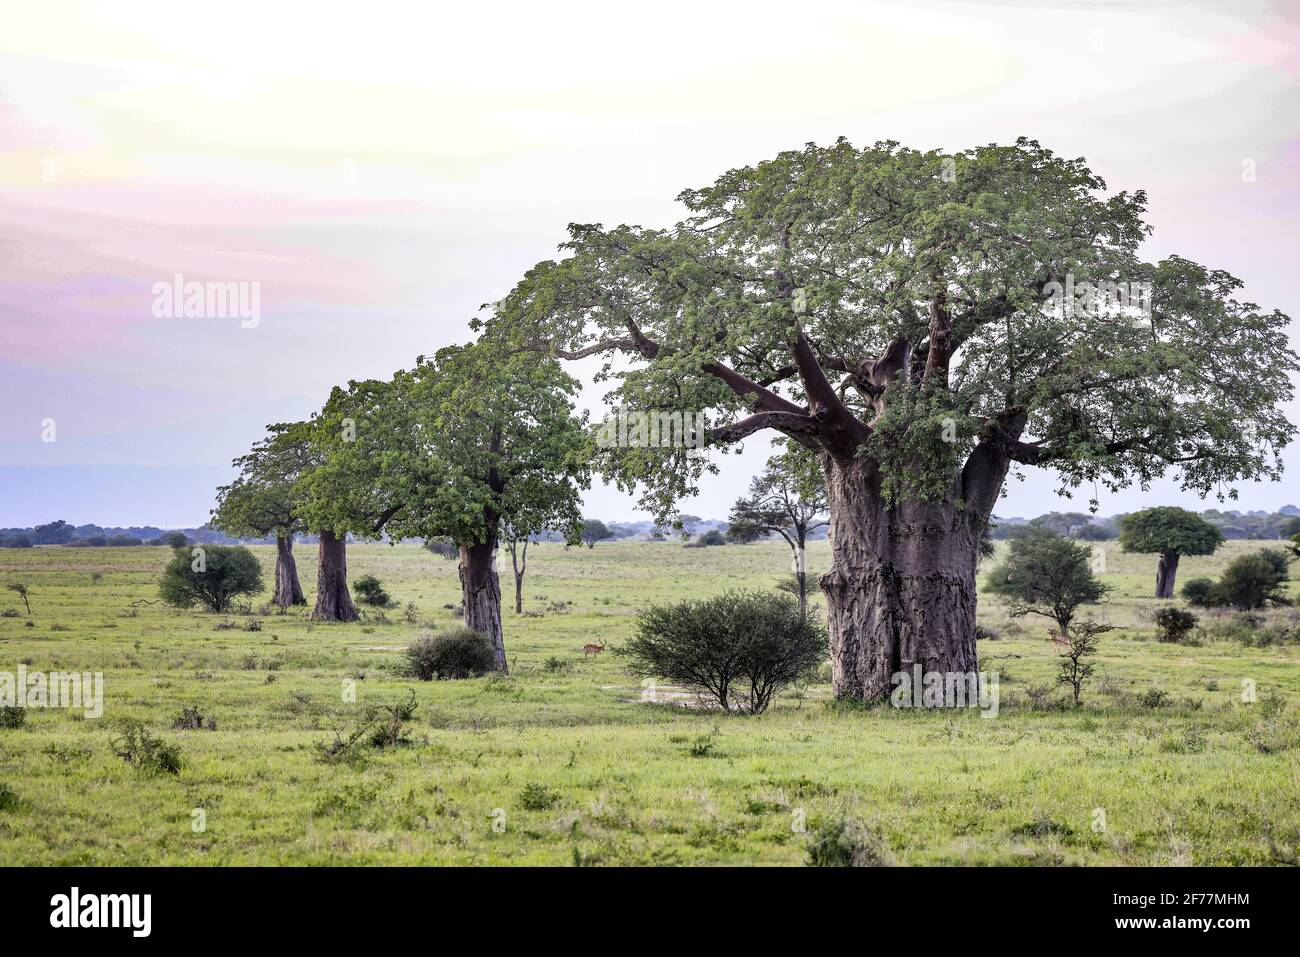 Tanzania, WMA (wildlife managment area) of Randilen, Monduli district, Arusha region, Alignment of baobabs (Adansonia digitata), in the savannah Stock Photo